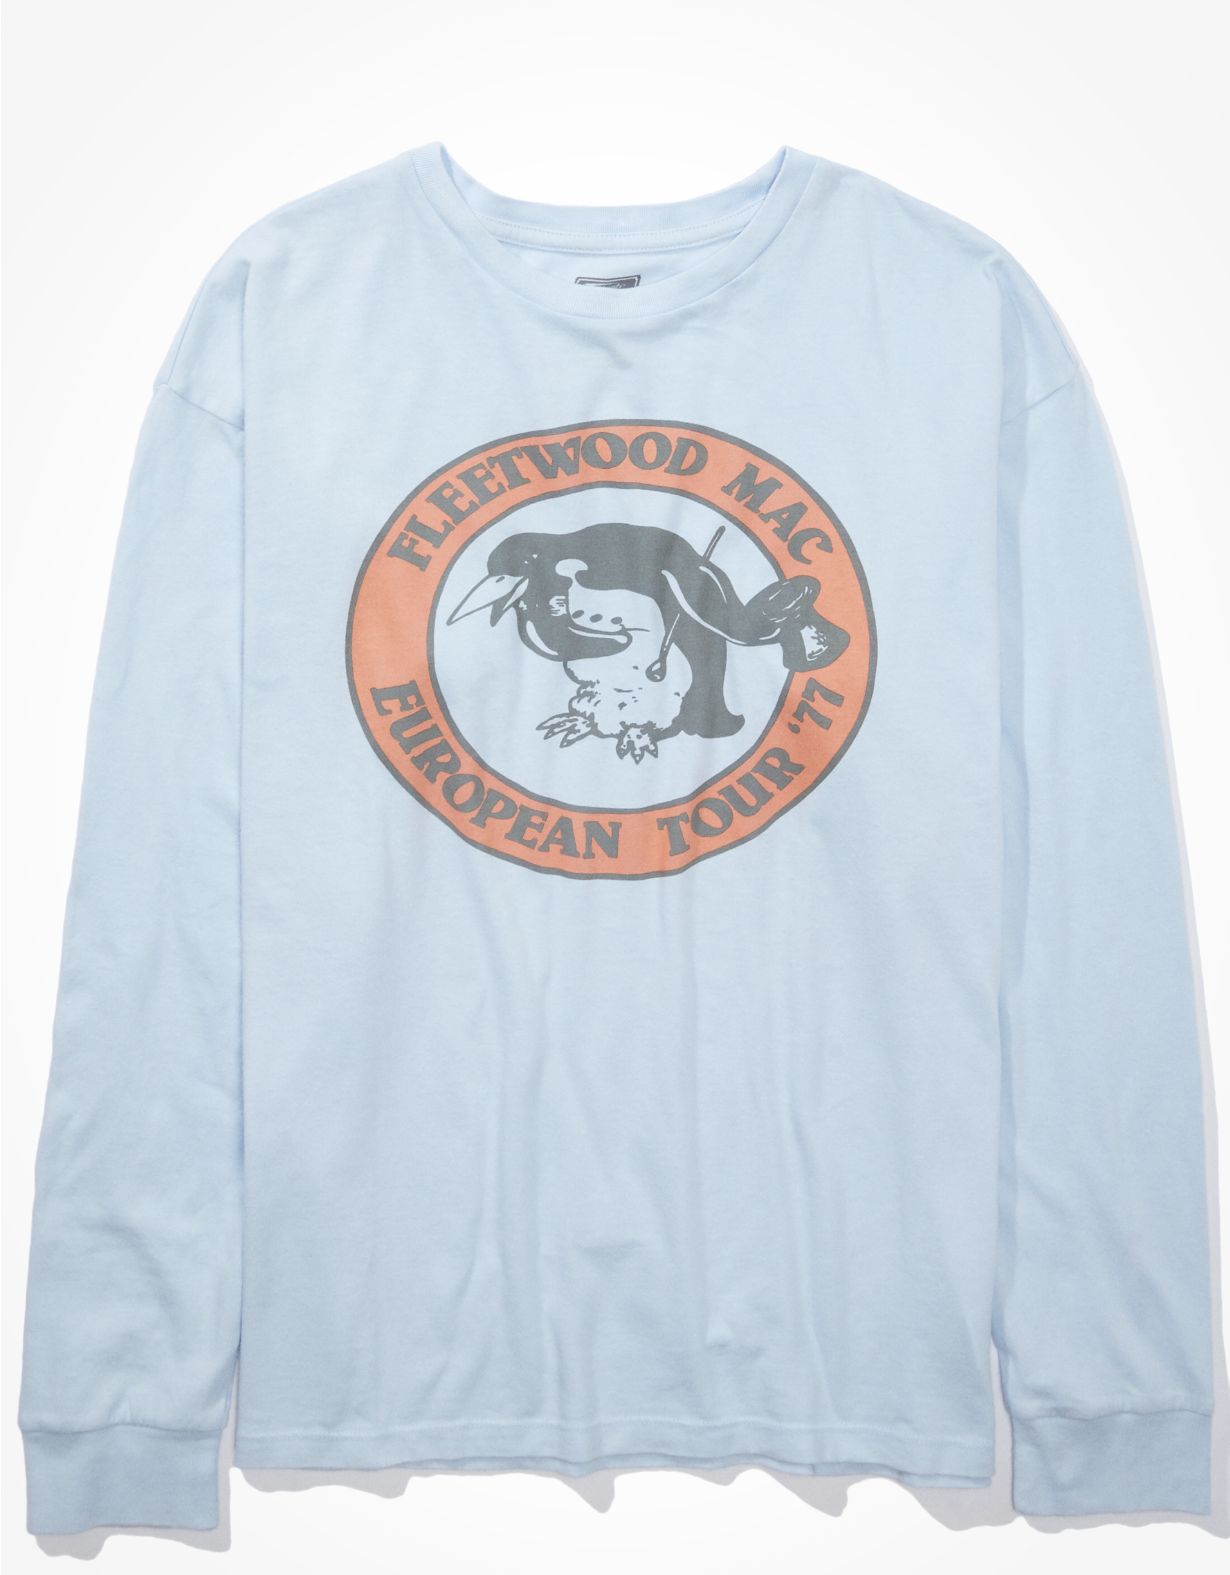 Tailgate Women's Fleetwood Mac Long Sleeve Graphic T-Shirt